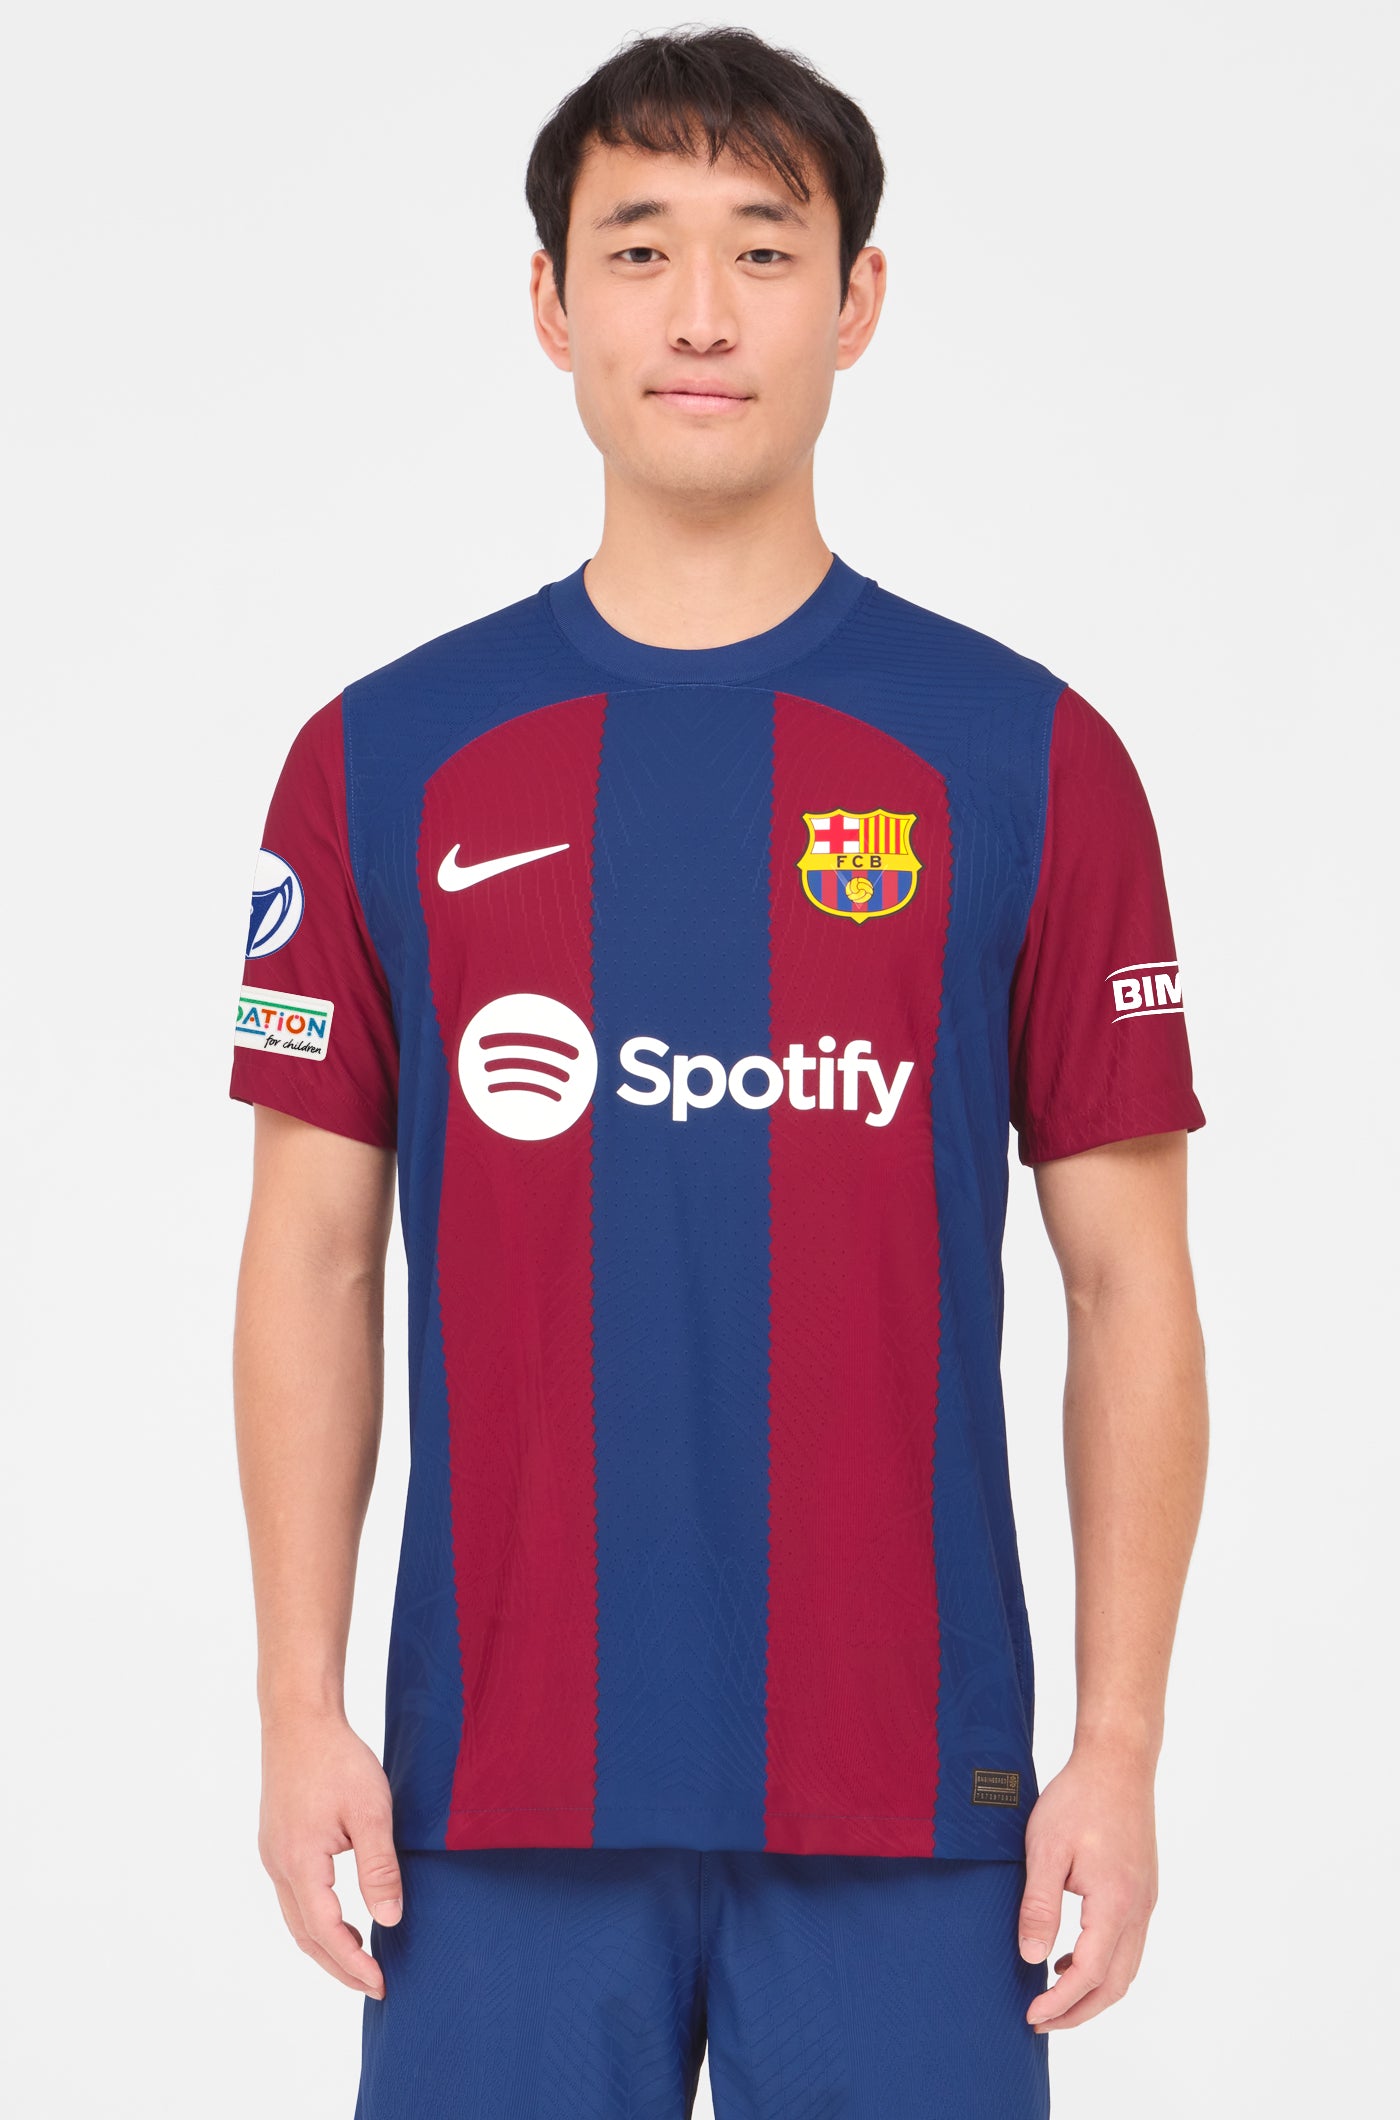 UWCL FC Barcelona home shirt 23/24 Player's Edition  - MARÍA LEÓN